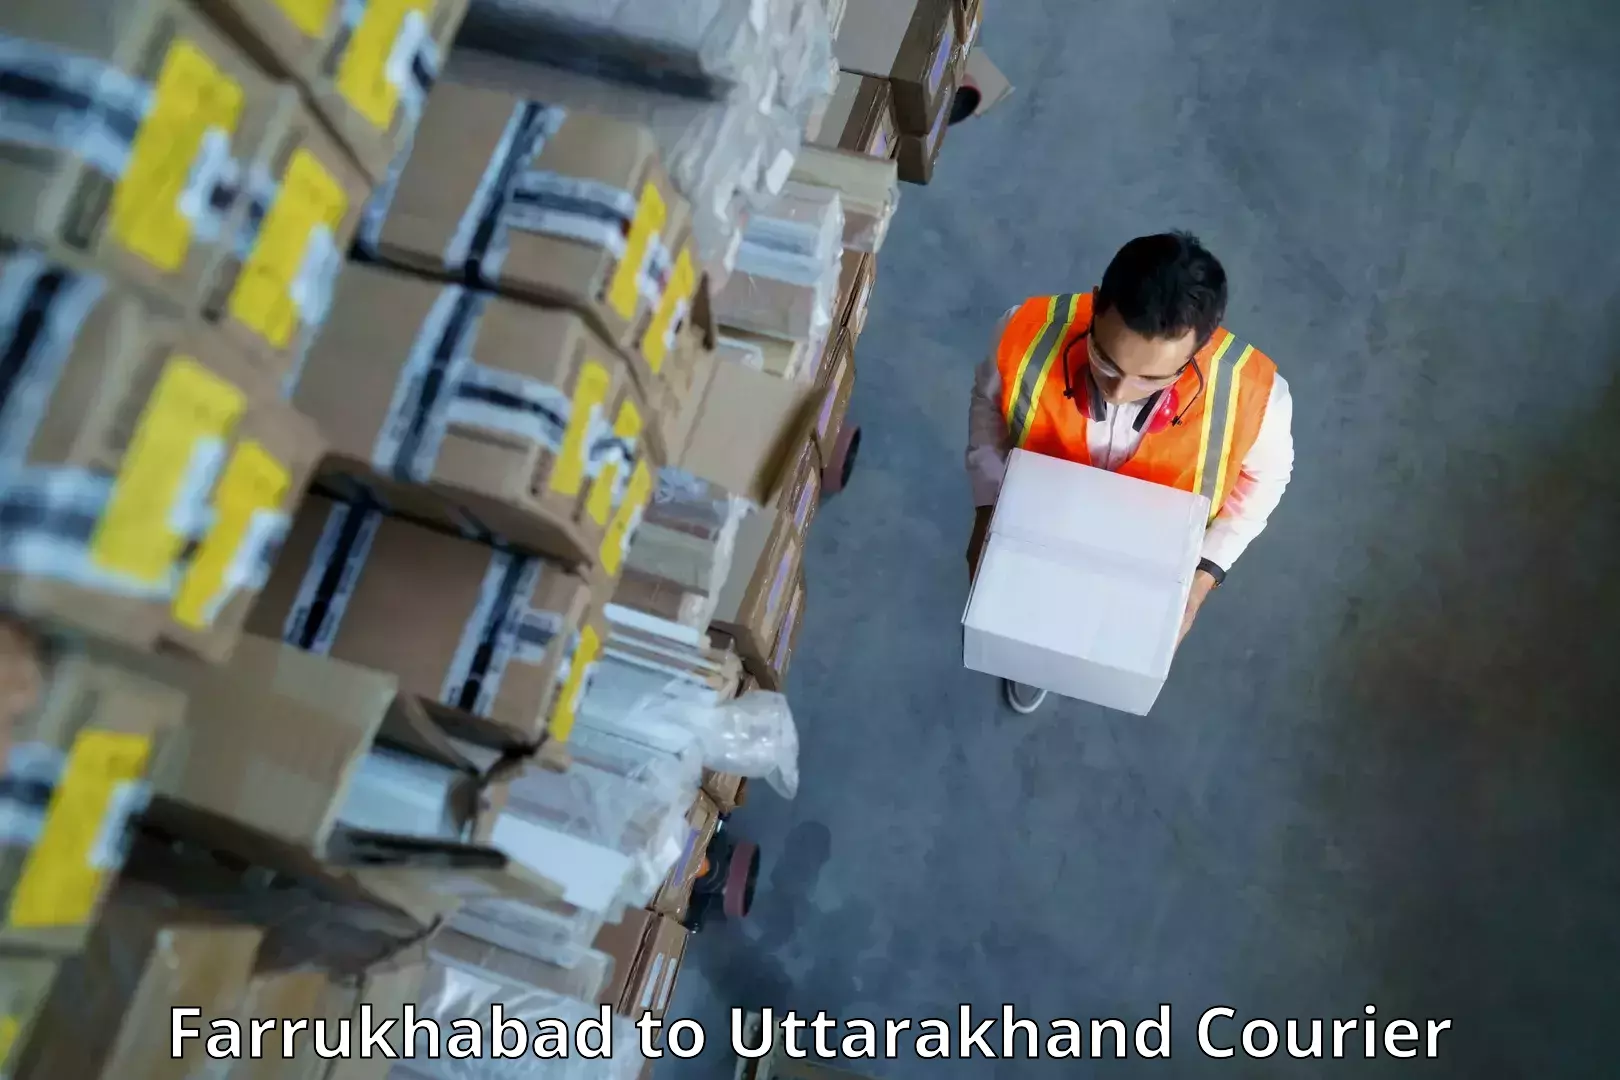 High-performance logistics Farrukhabad to Roorkee